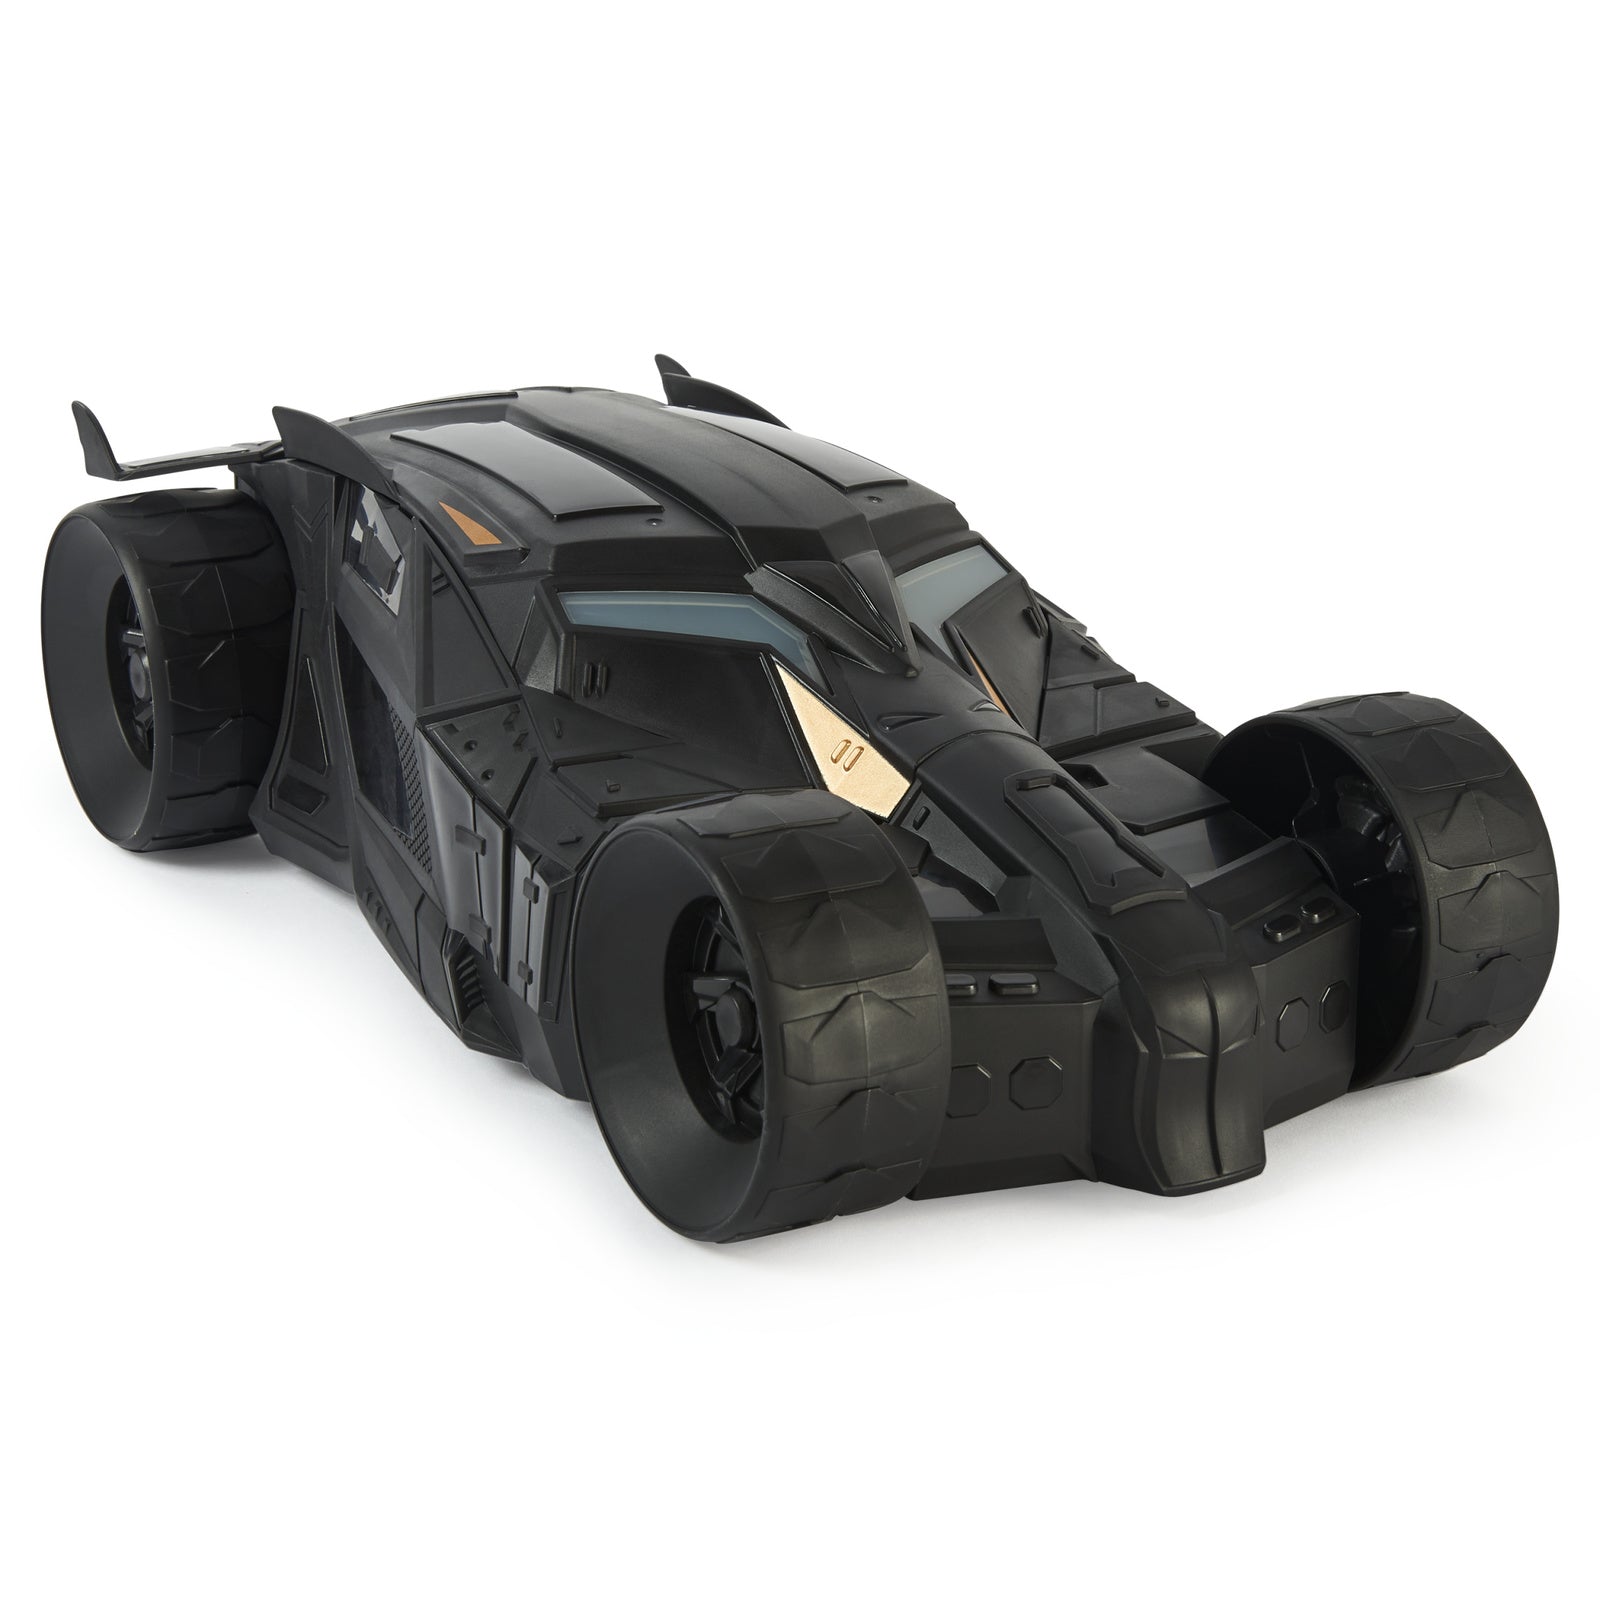 Batman: Batmobile - Play Vehicle